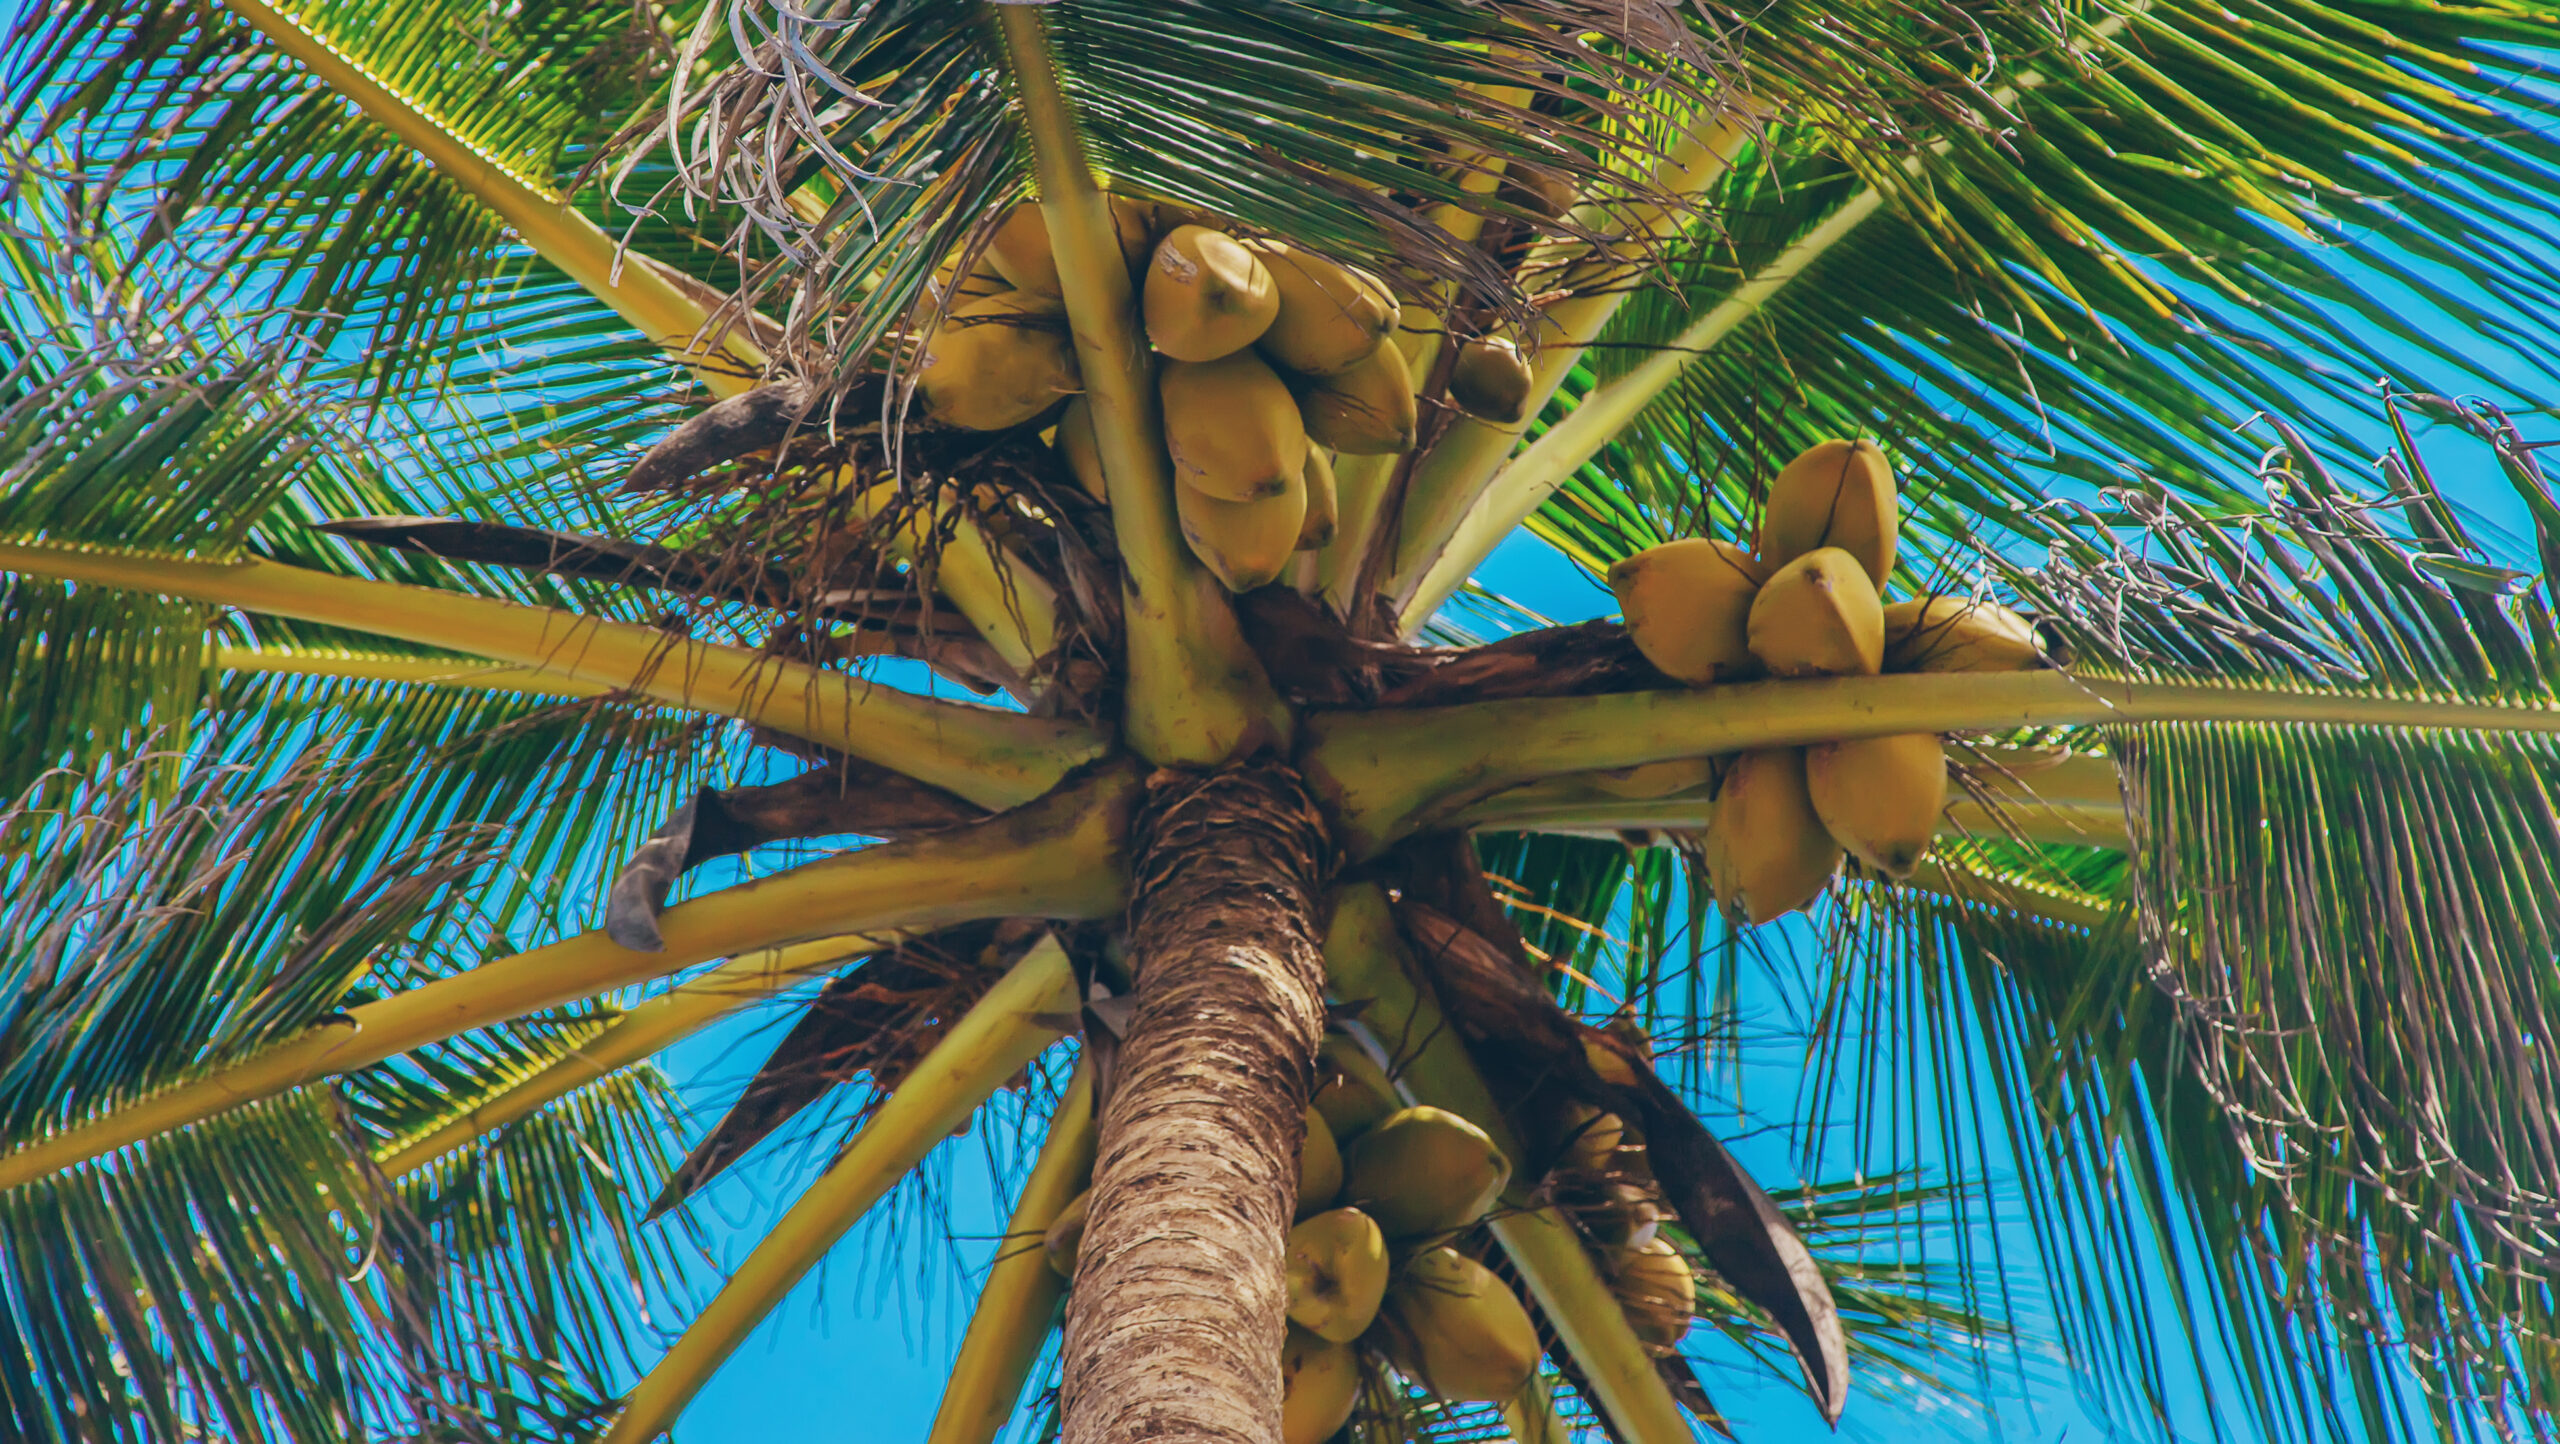 Les chutes de noix de coco en Polynésie